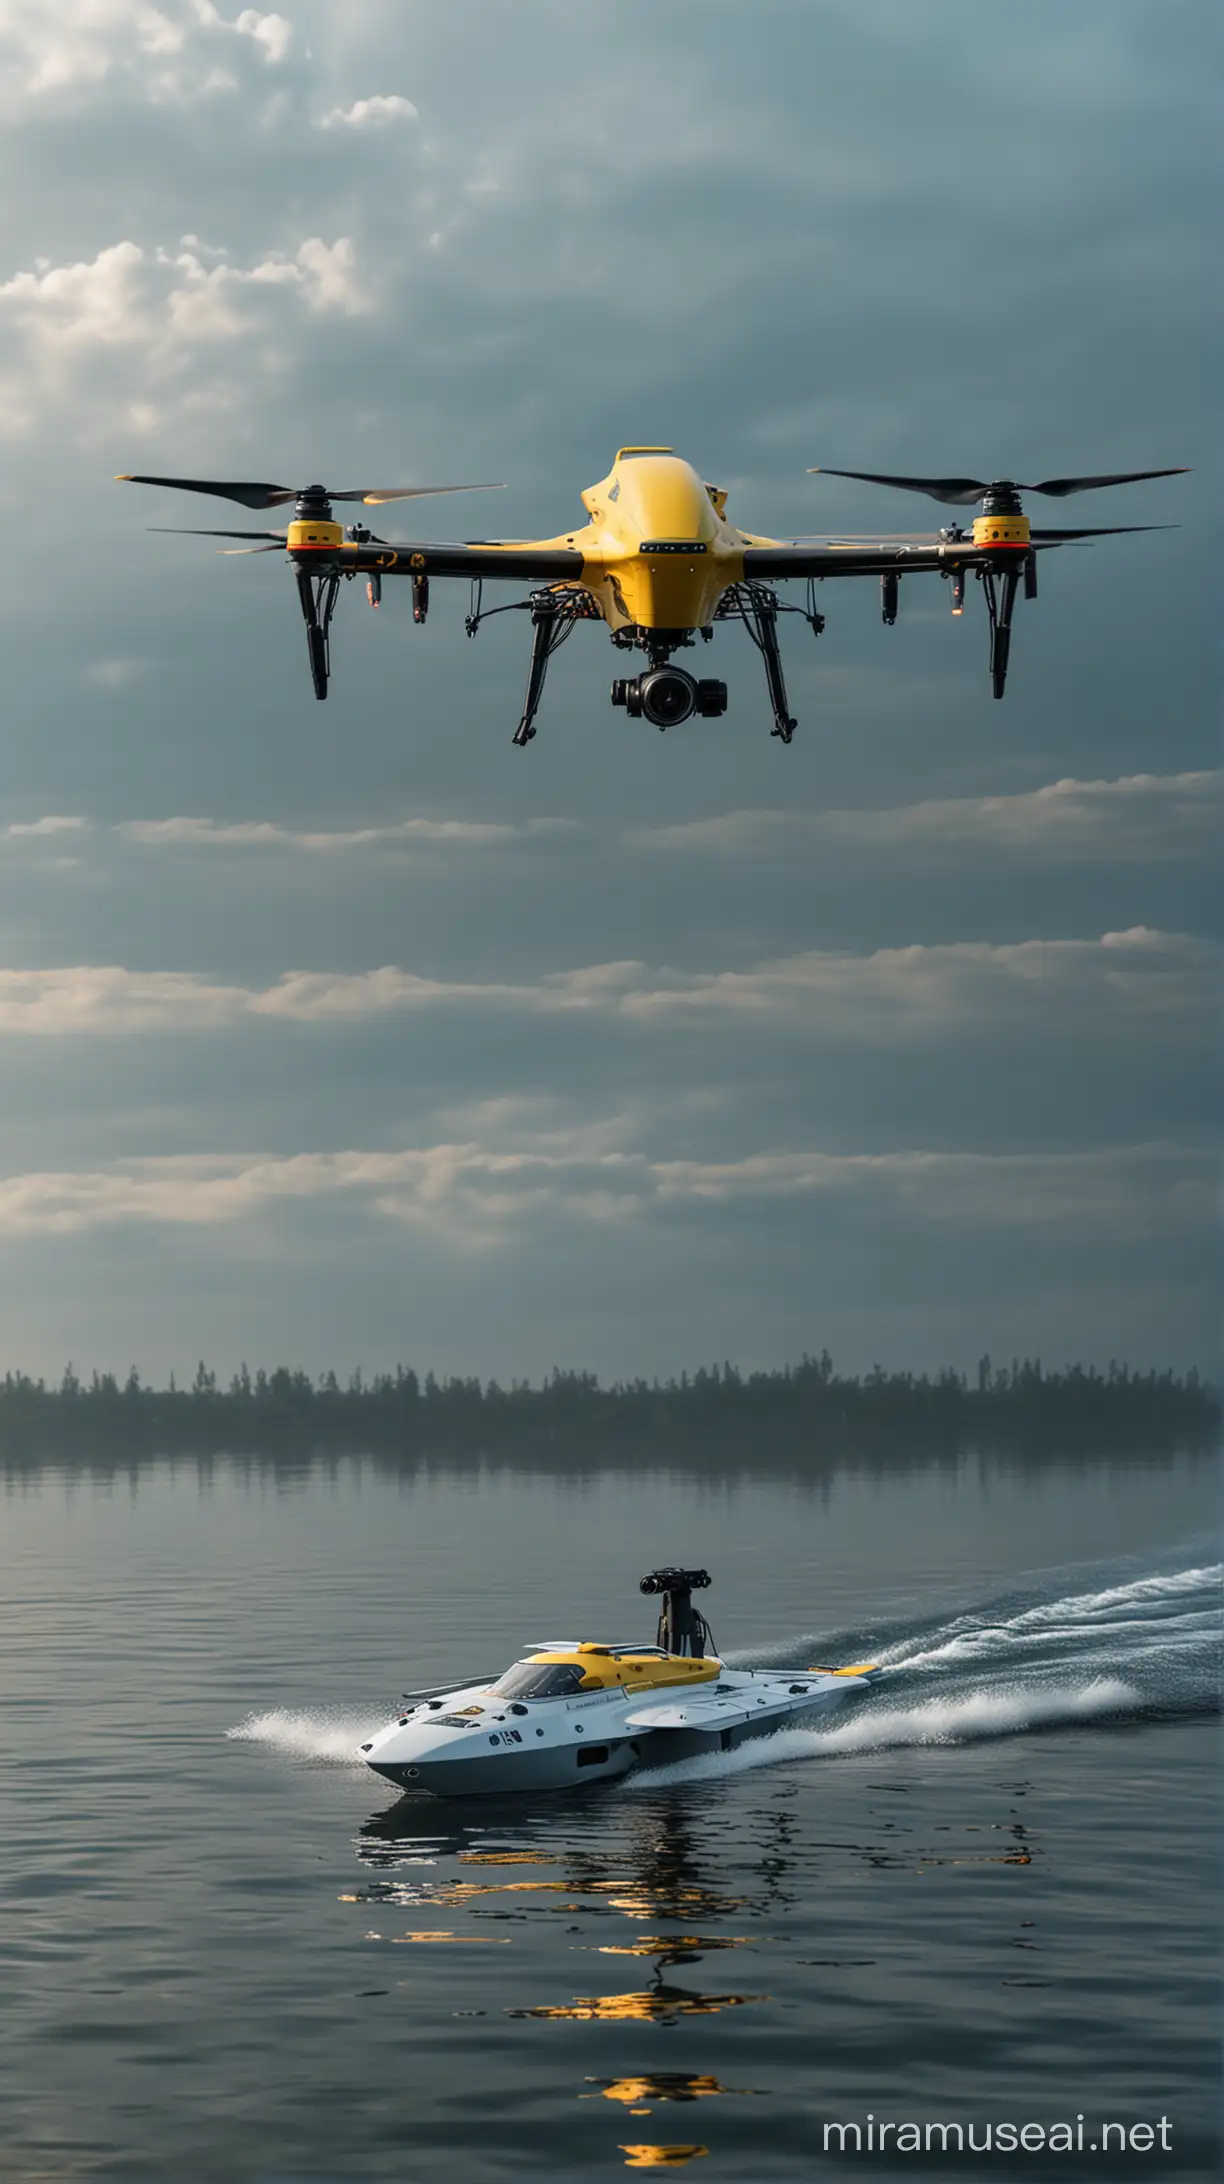 HyperRealistic Ukrainian Maritime Drone Cinematic 8K Imagery